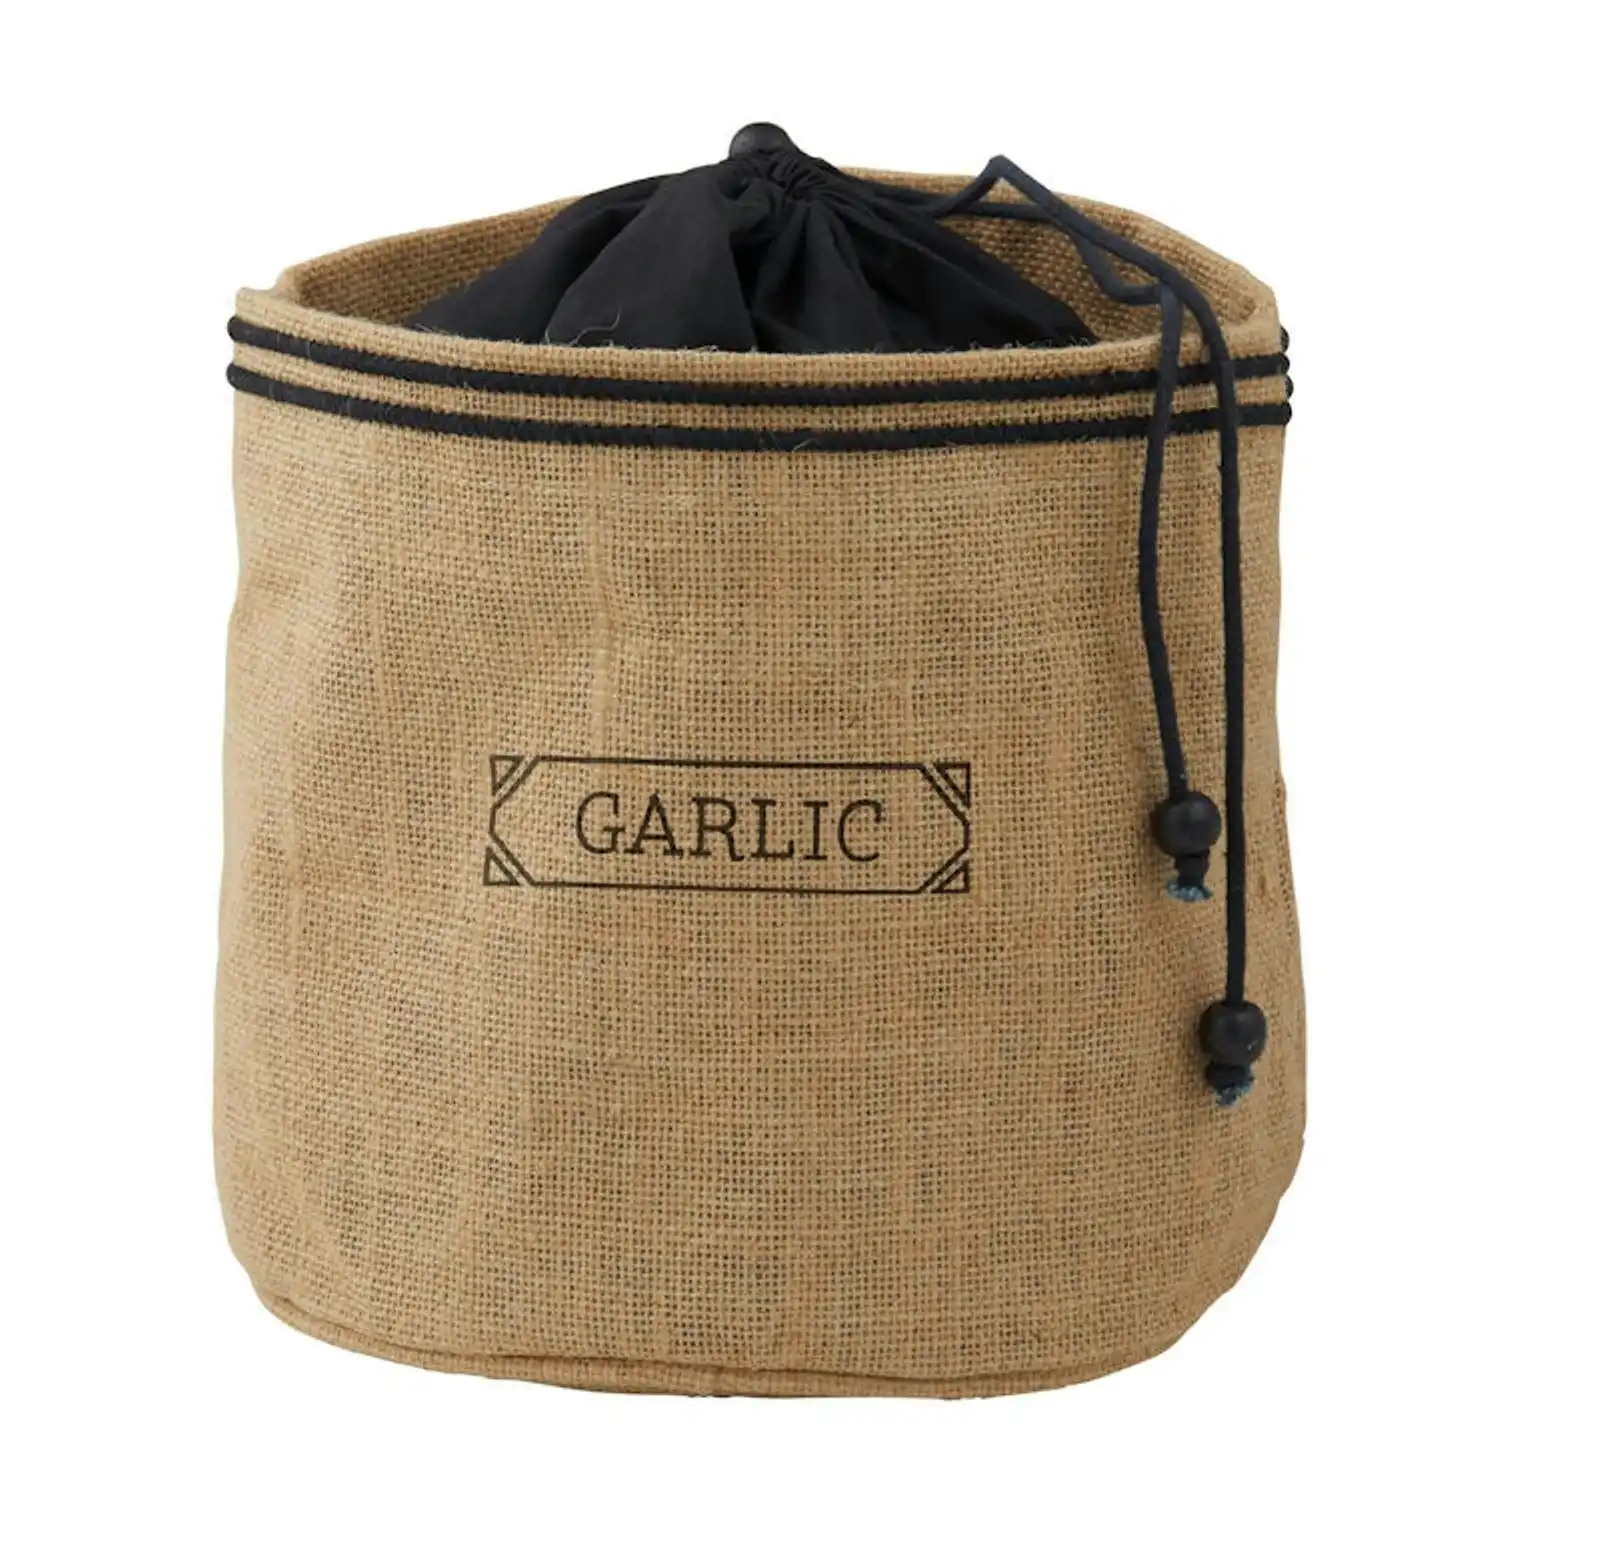 Pantry Hessian Preserving Bag   Garlic